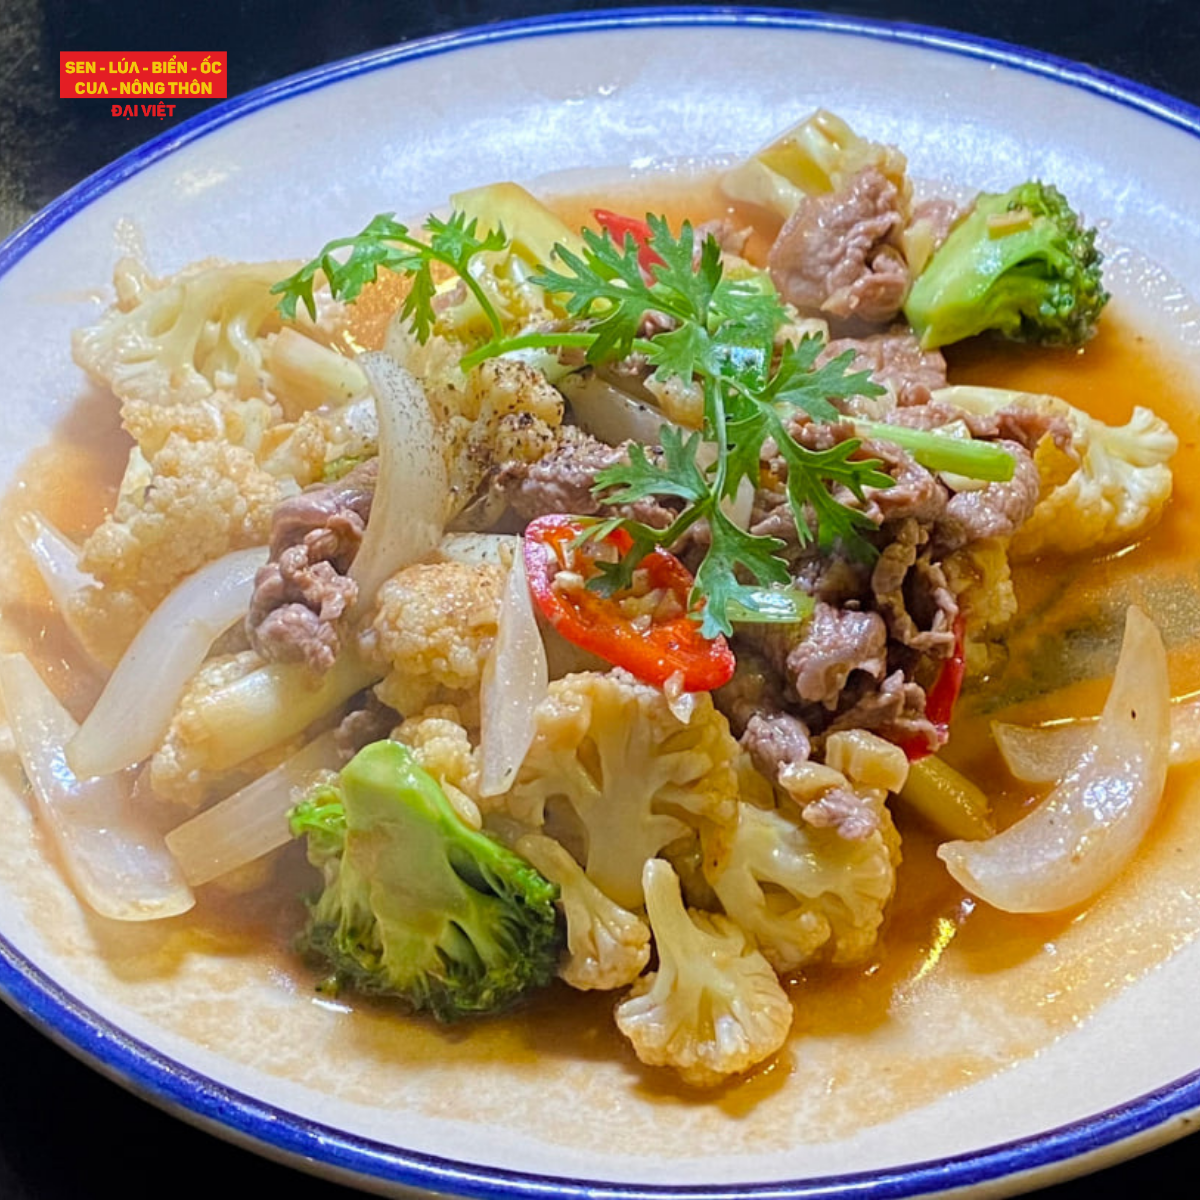  Stir-fried Beef With Broccoll, Cauliflower, Served With Steamed Rice - Bò Xào Bông Cải 